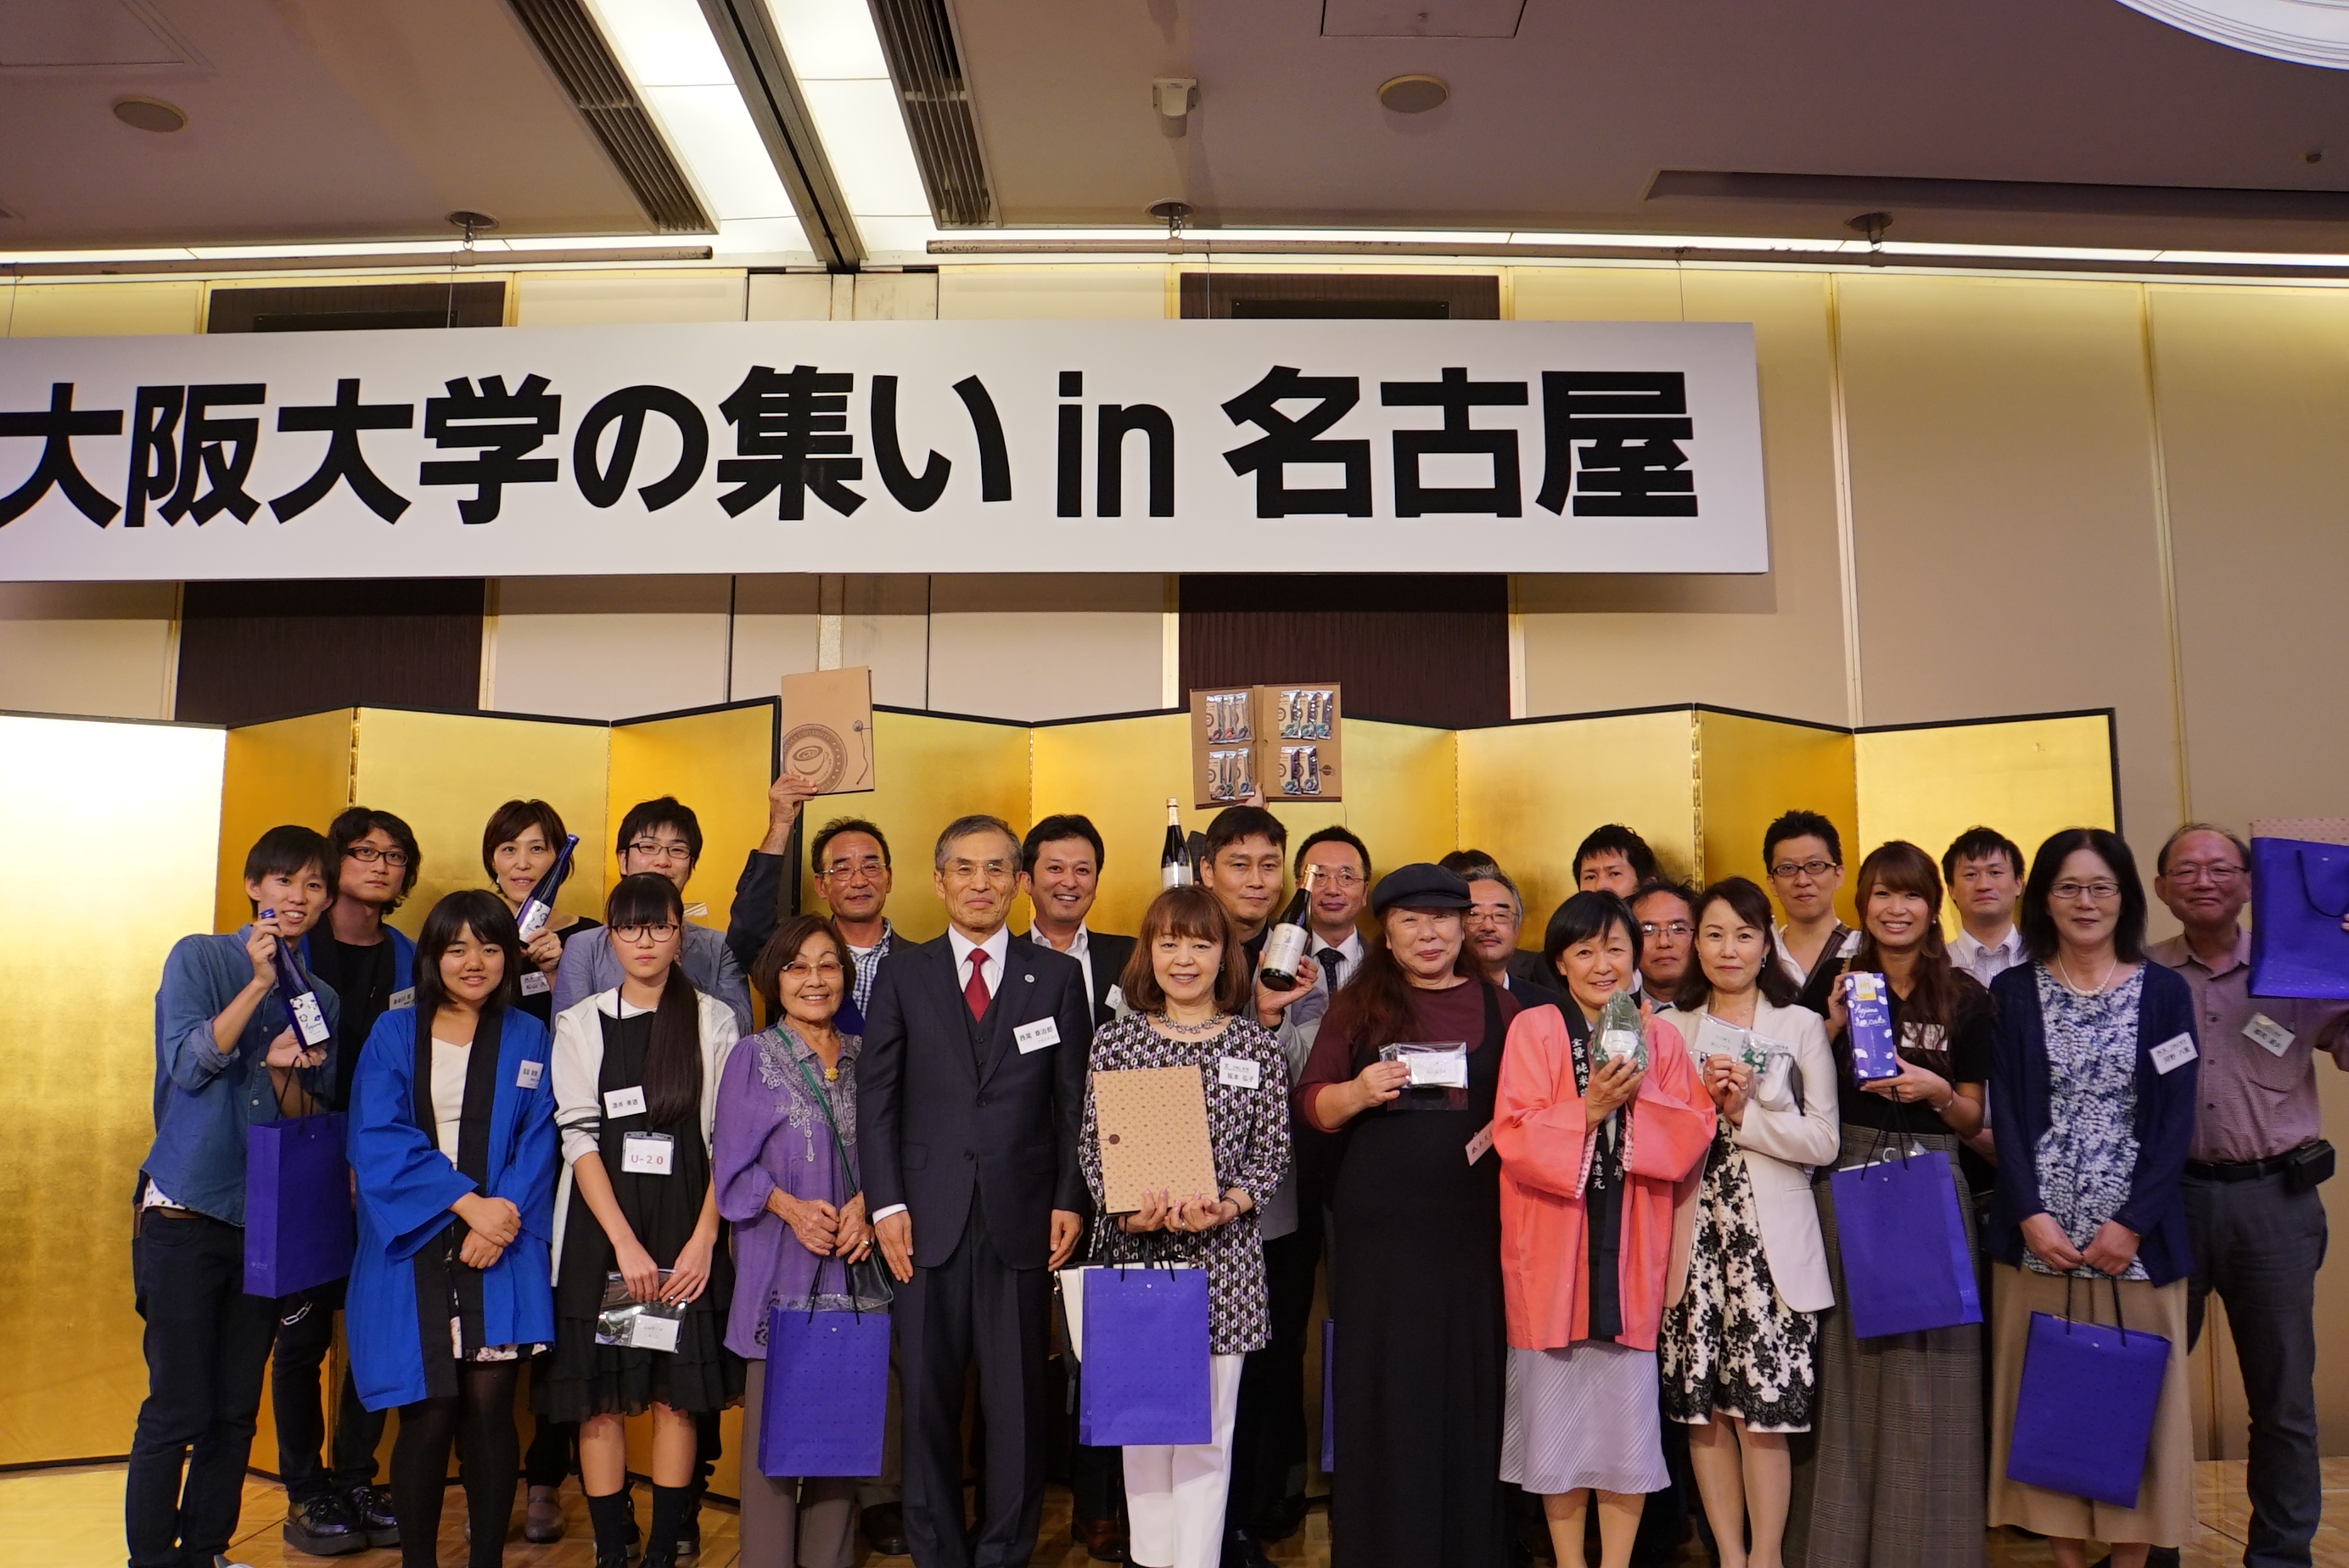 Some 300 individuals attend the Osaka University Alumni Reunion in Nagoya